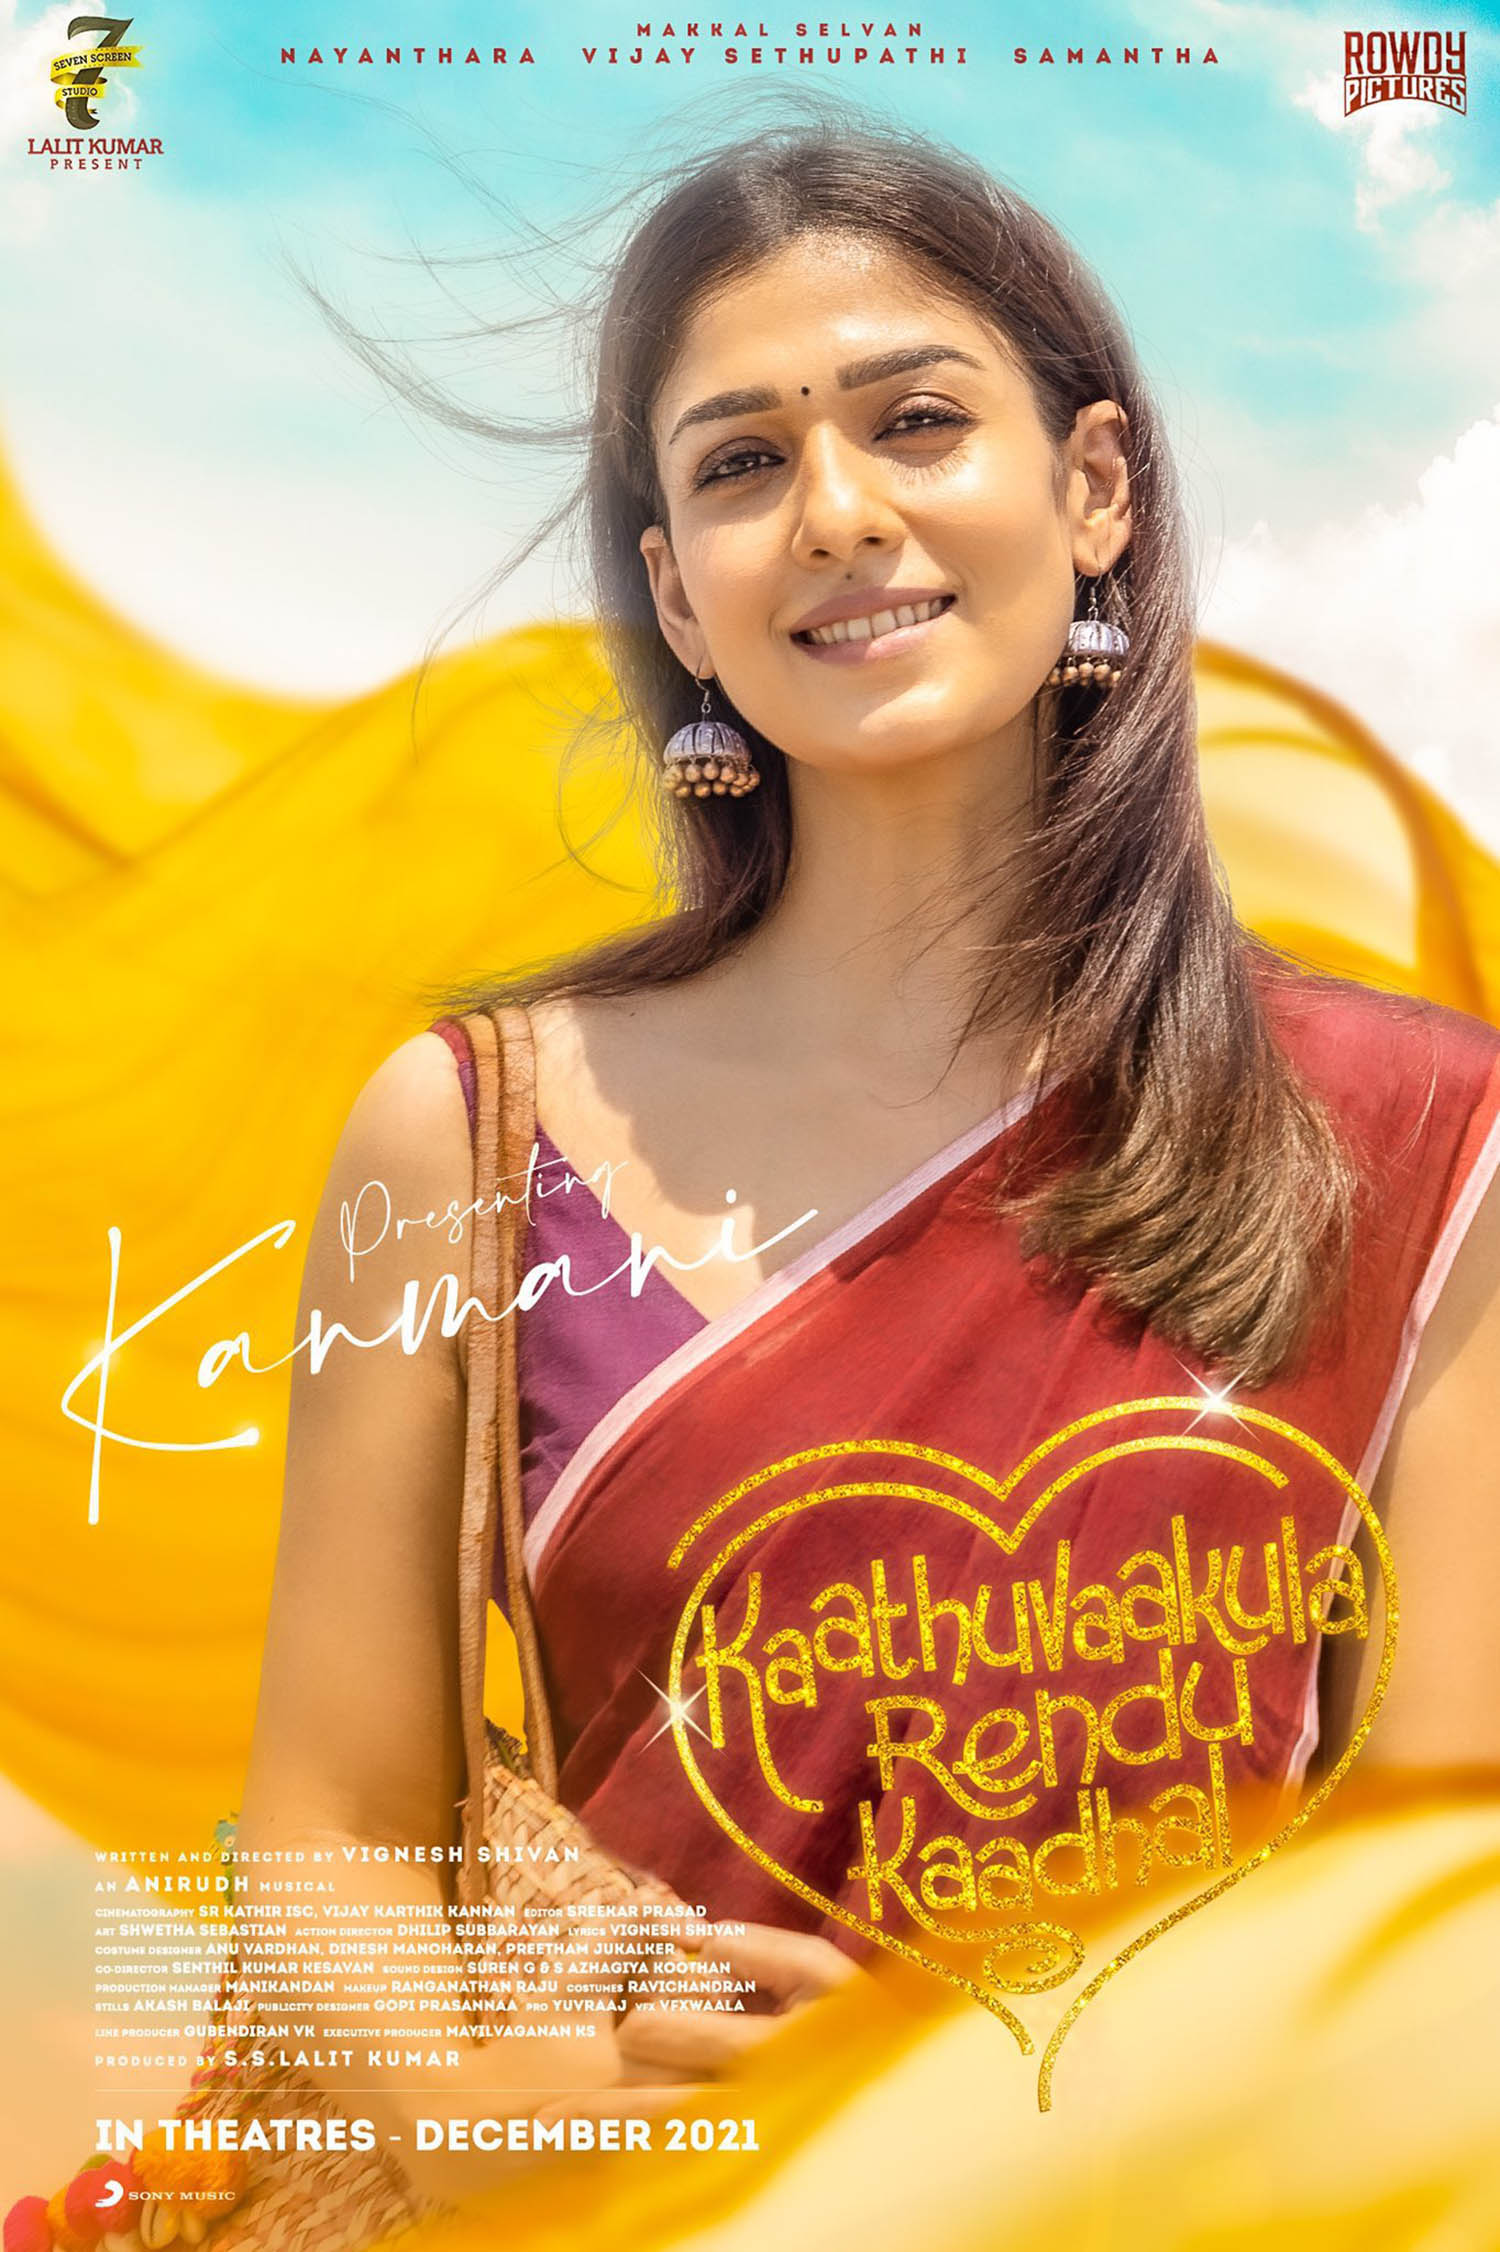 http://onlookersmedia.in/wp-content/uploads/2021/12/kaathuvaakula-rendu-kaadhal-nayanthara-character-poster.jpg